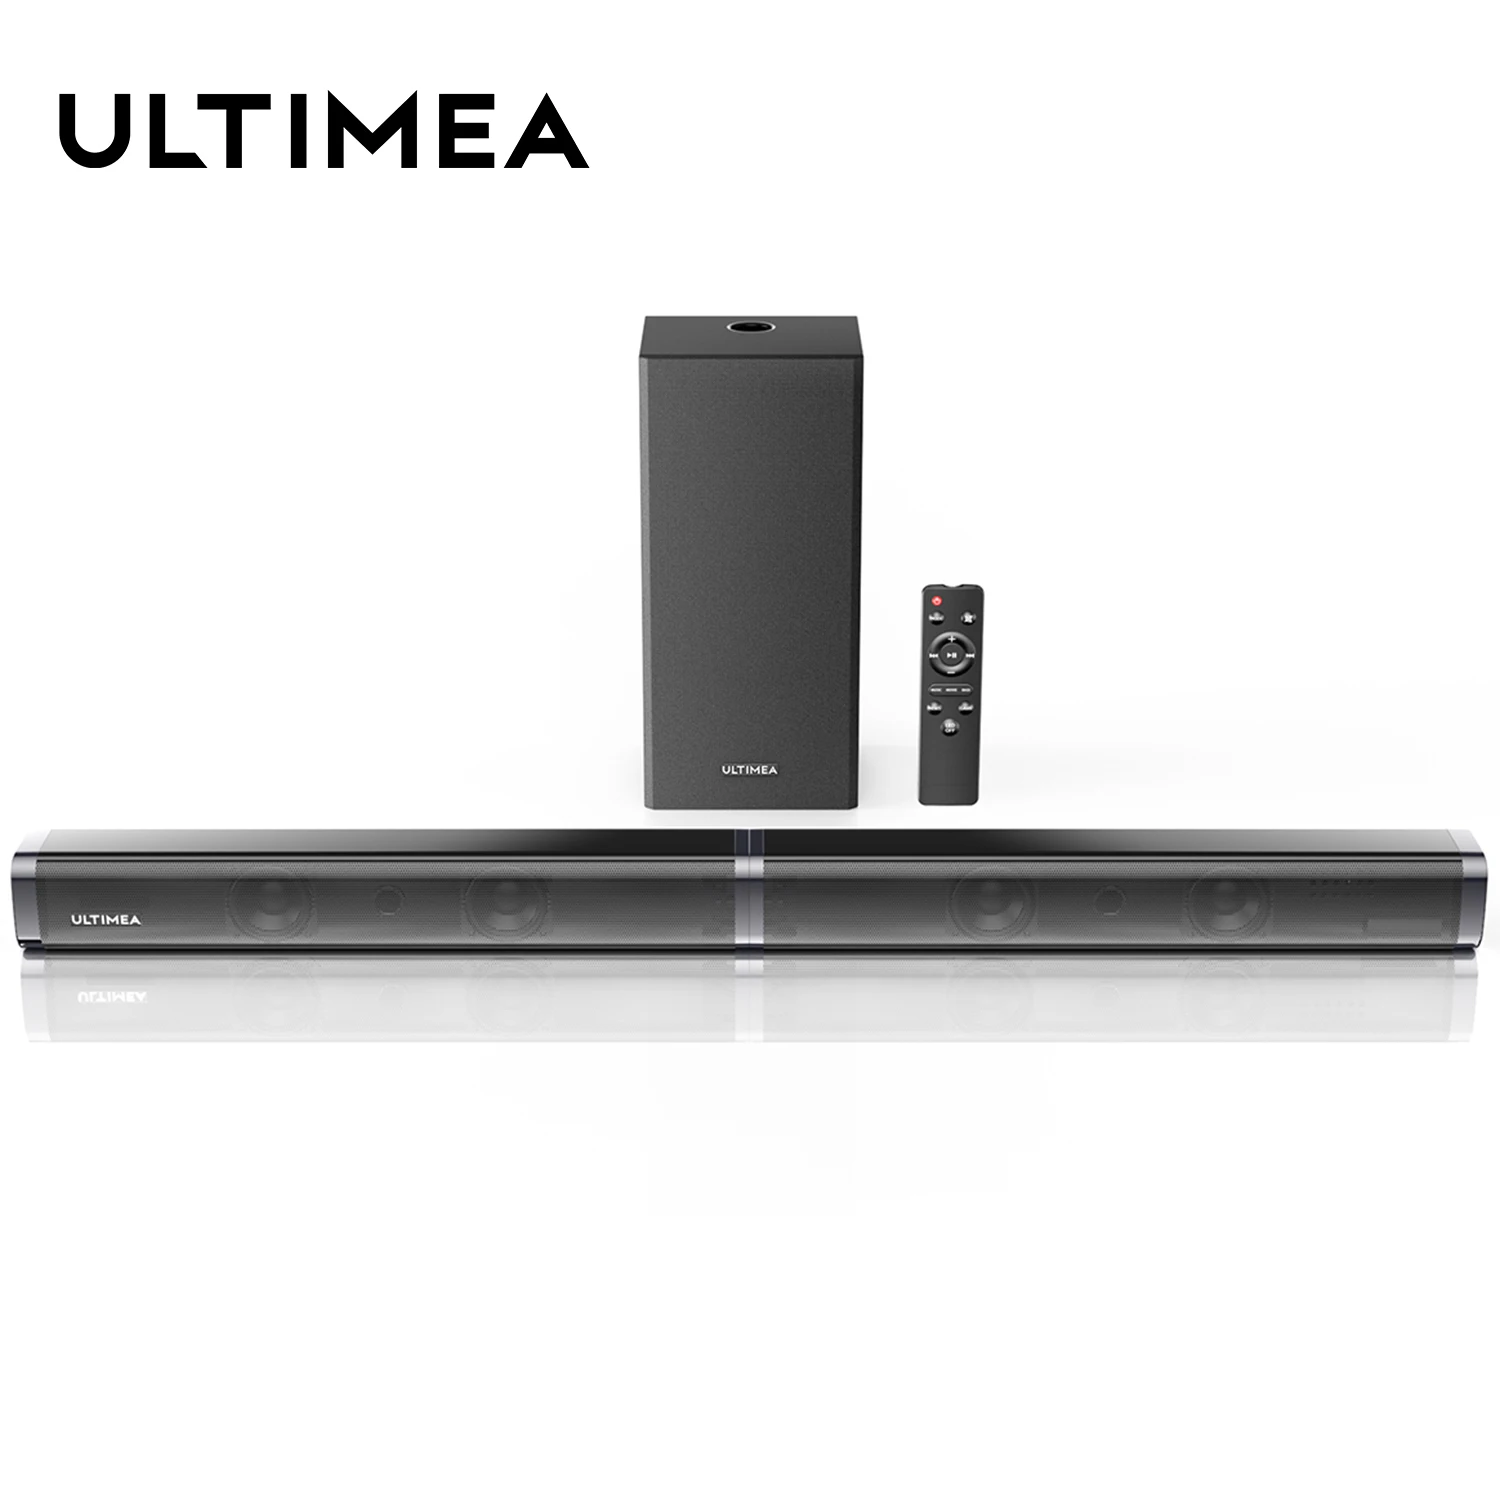 

ULTIMEA 100W TV SoundBar 2.1 Bluetooth Speaker 5.0 Home Theater Sound System 3D Surround Sound Bar Remote Control With Subwoofer